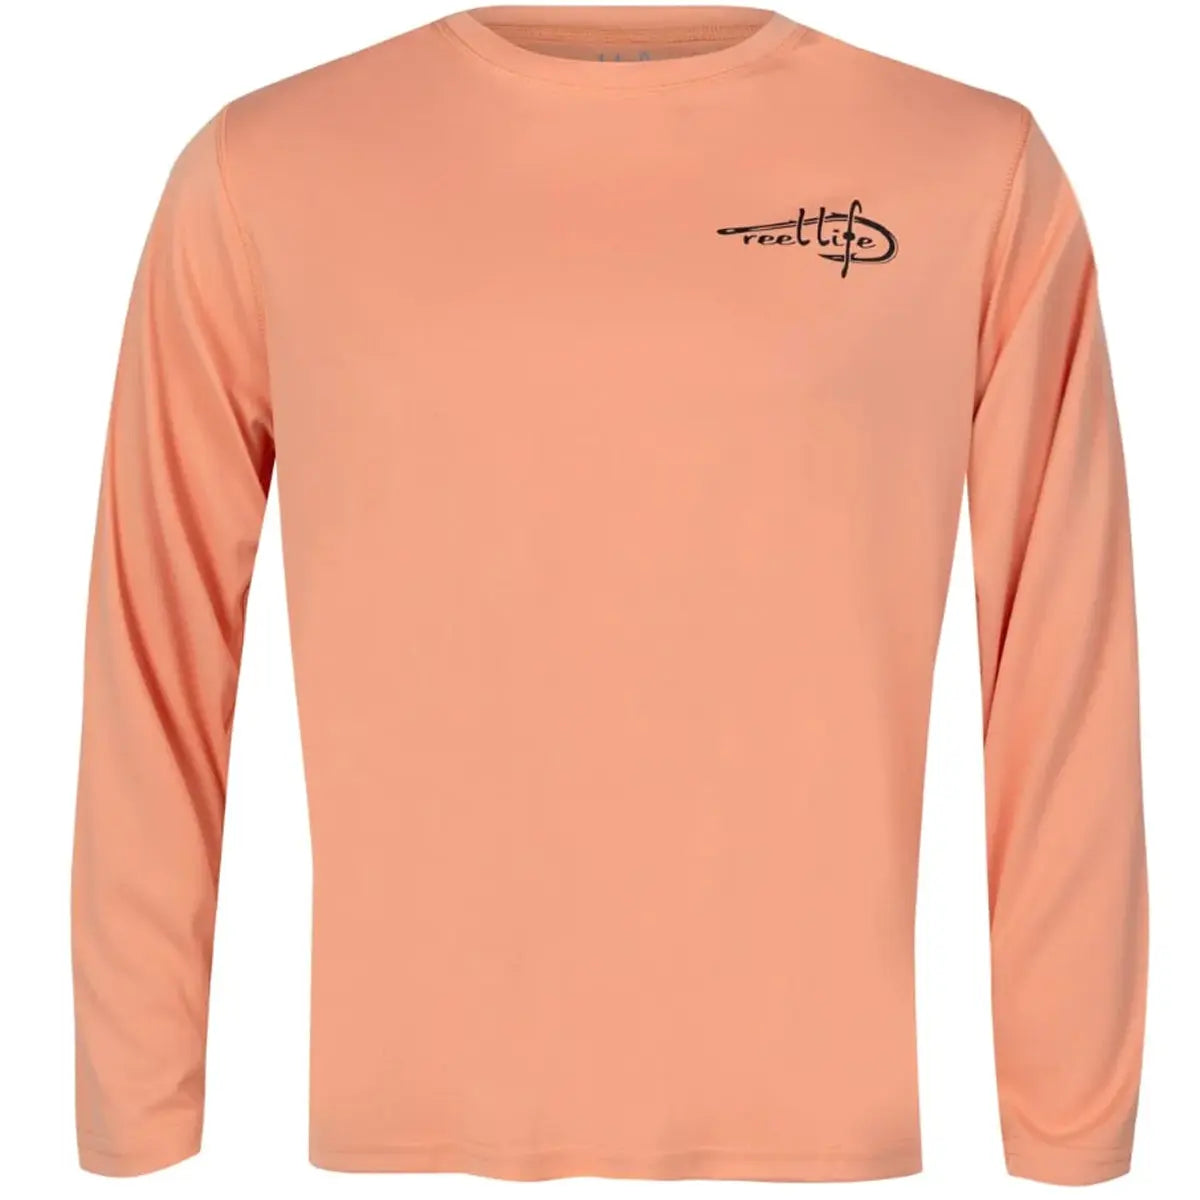 Reel Life 3 Lines Tarpon UV Long Sleeve Performance T-Shirt - Blooming Dahlia Reel Life